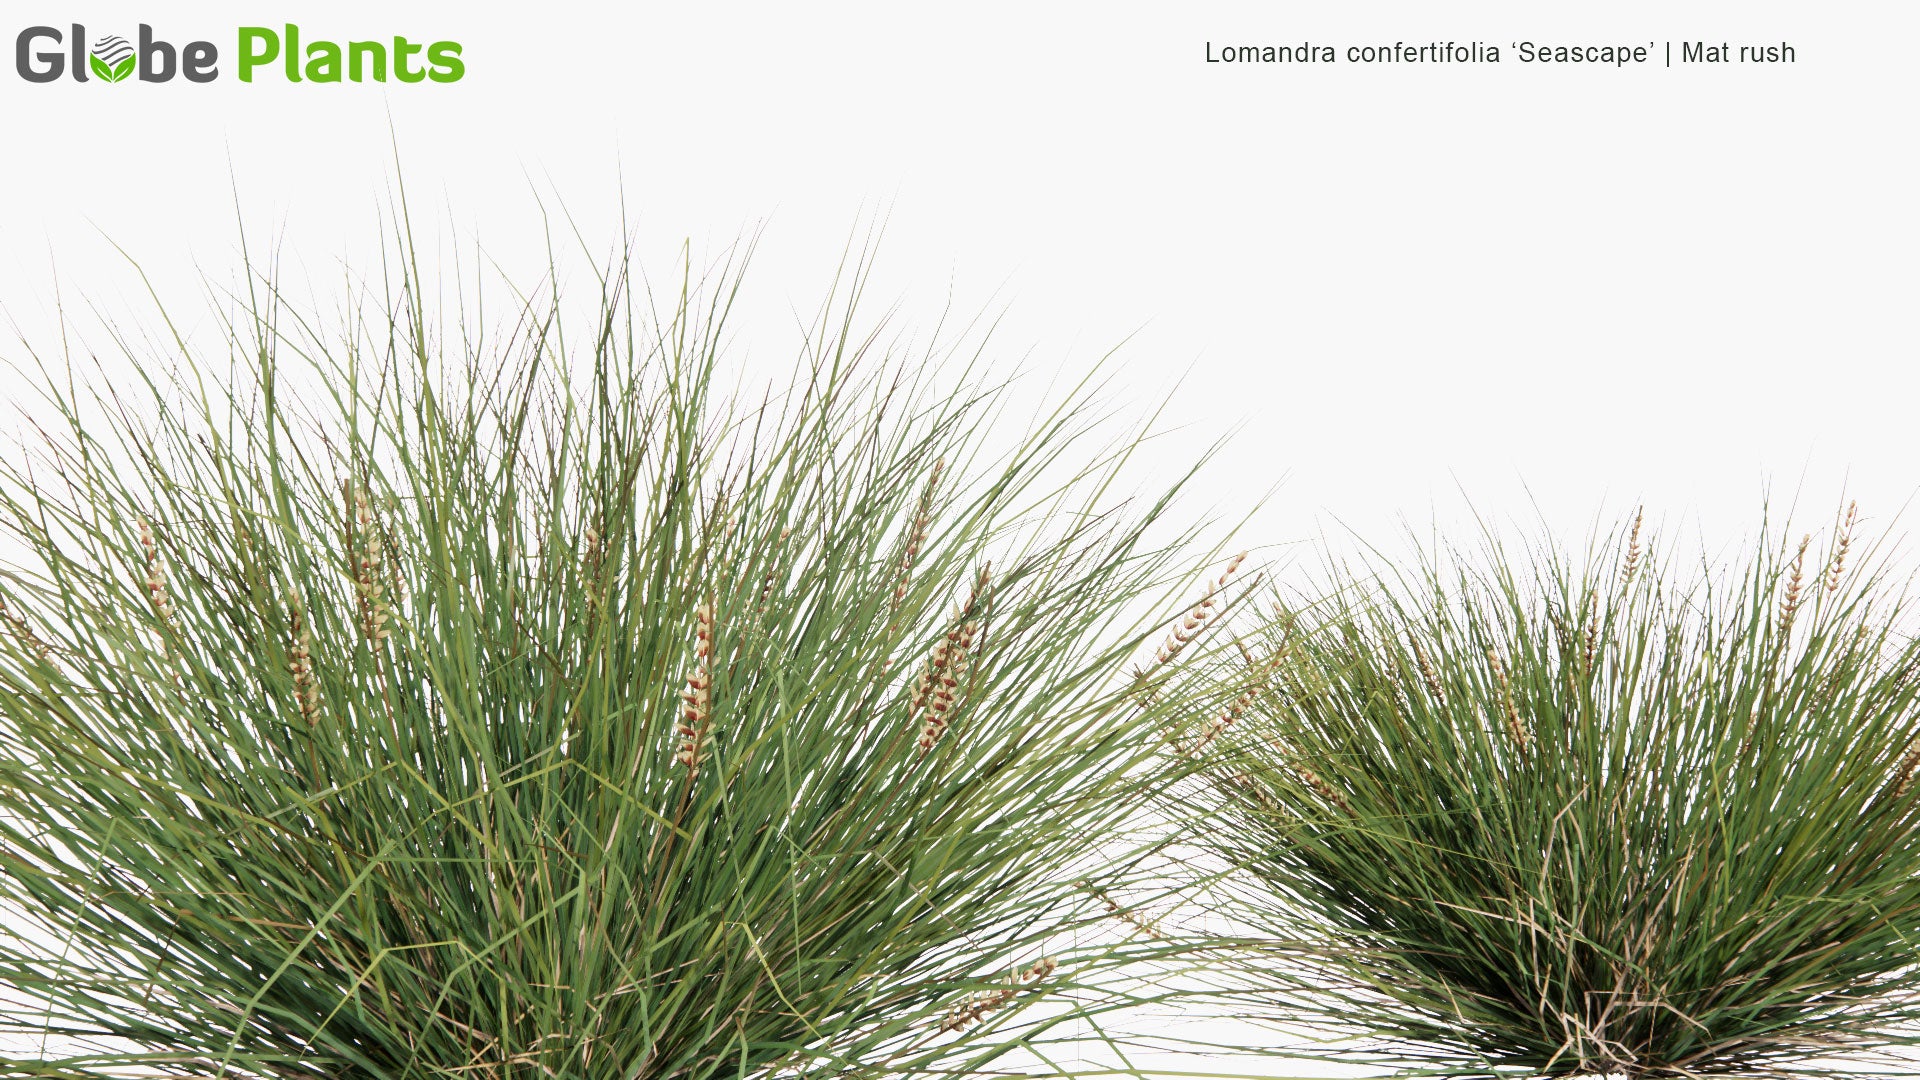 Low Poly Lomandra 'Confertifolia Seascape' - Mat Rush (3D Model)